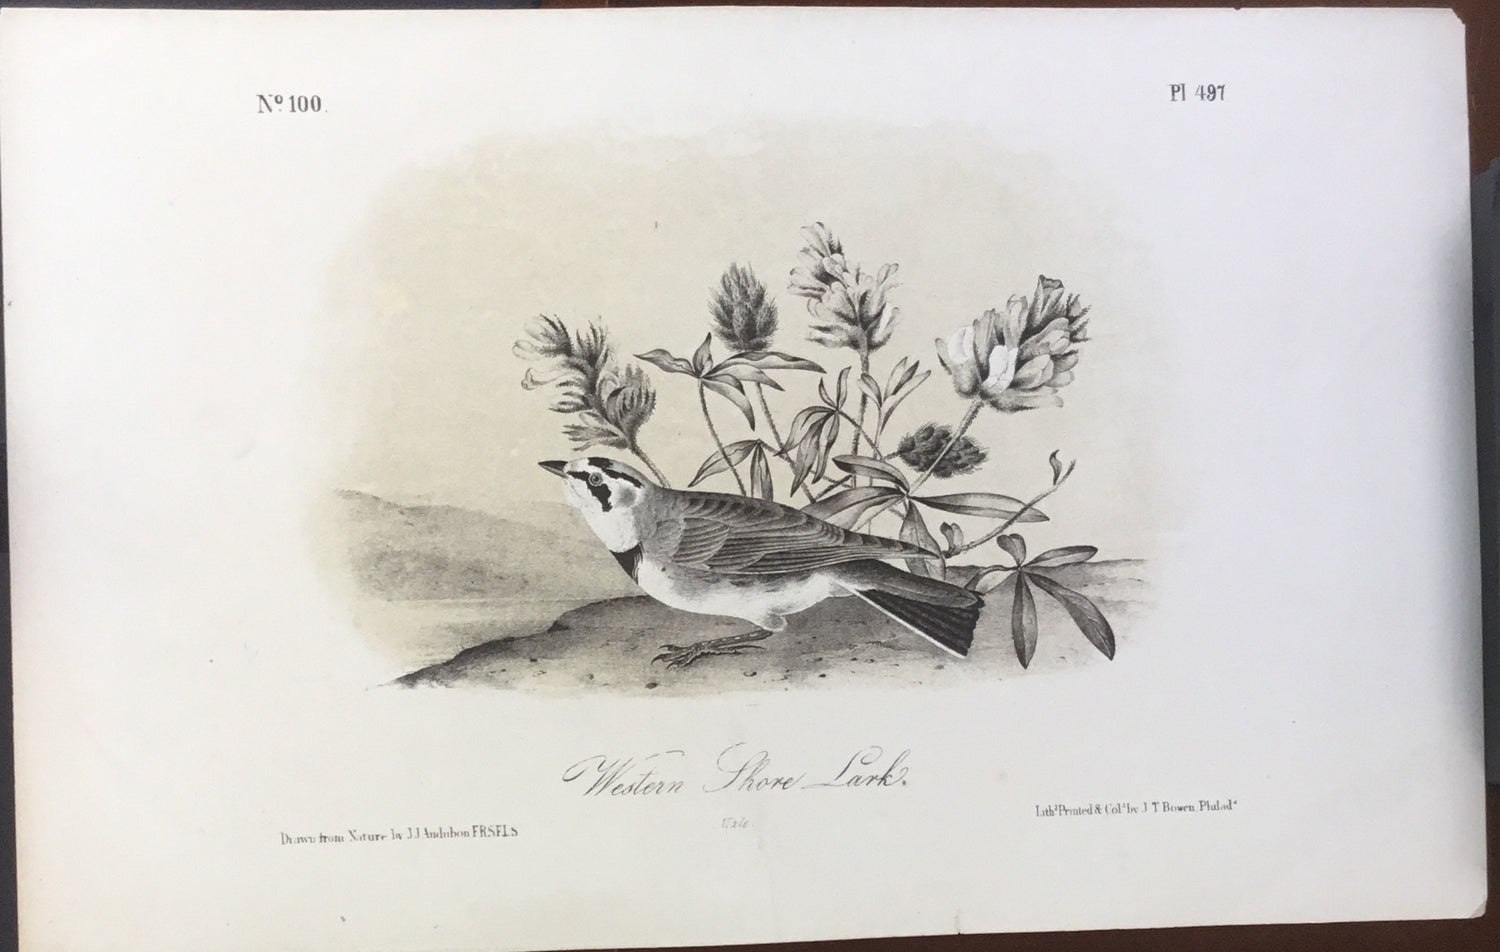 Audubon Octavo Western Shore Lark, plate 497, uncolored test sheet, 7 x 11